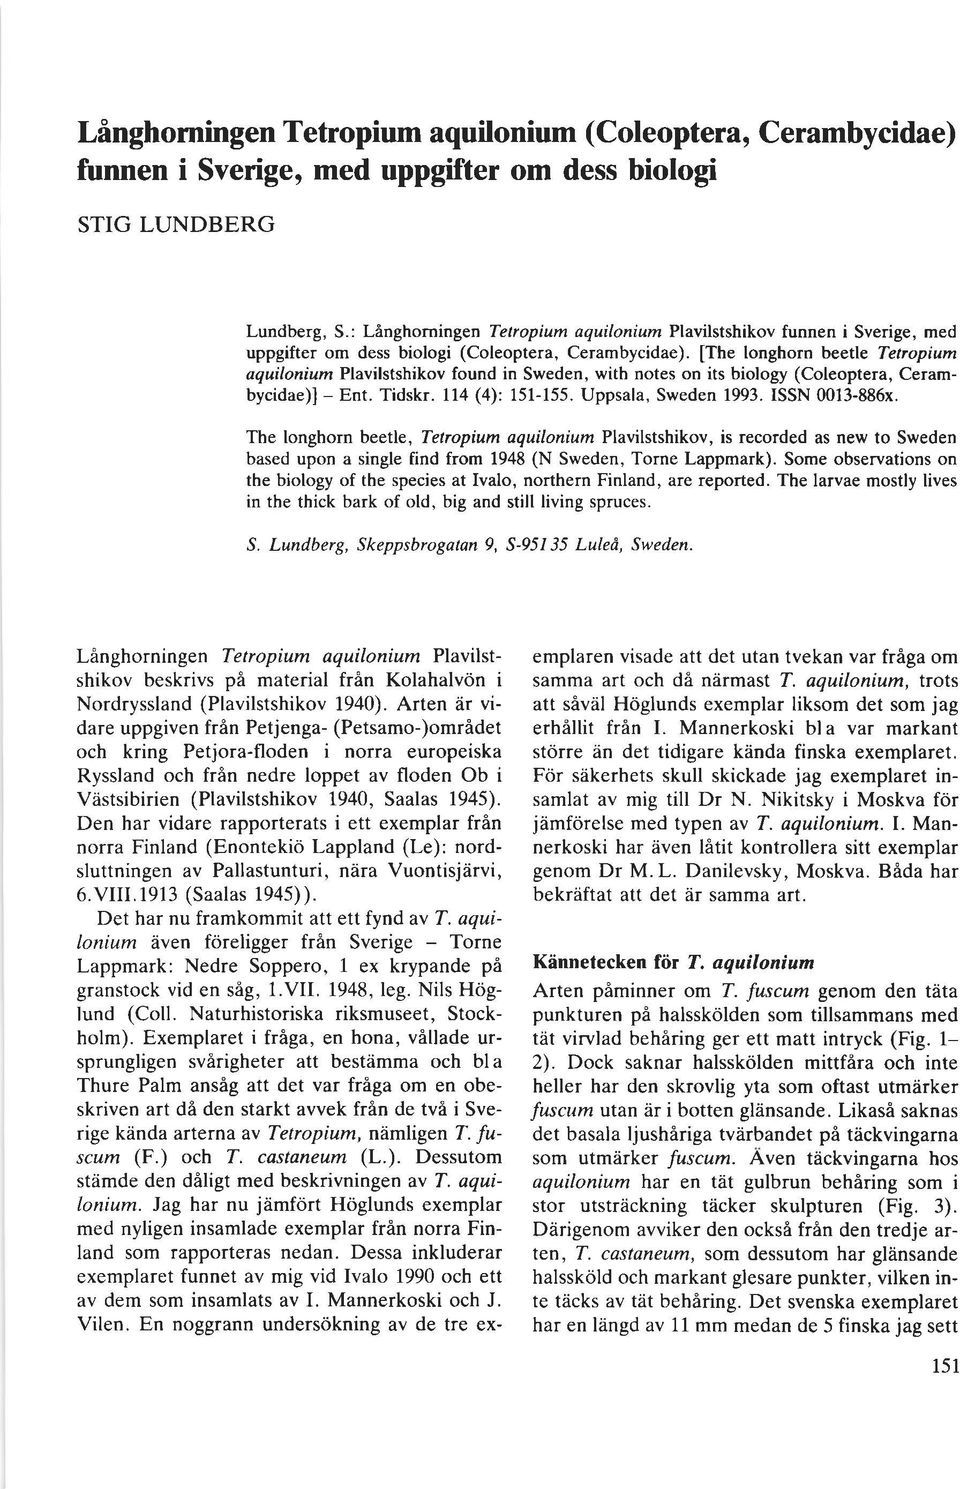 [The longhorn beetle Tetropium aquilonium Plavilstshikov found in Sweden, with notes on its biology (Coleoptera, Cerambycidae)l - Ent. Tidskr. ll4 (4): 151-155. Uppsala, Sweden 1993. ISSN 0013-886x.